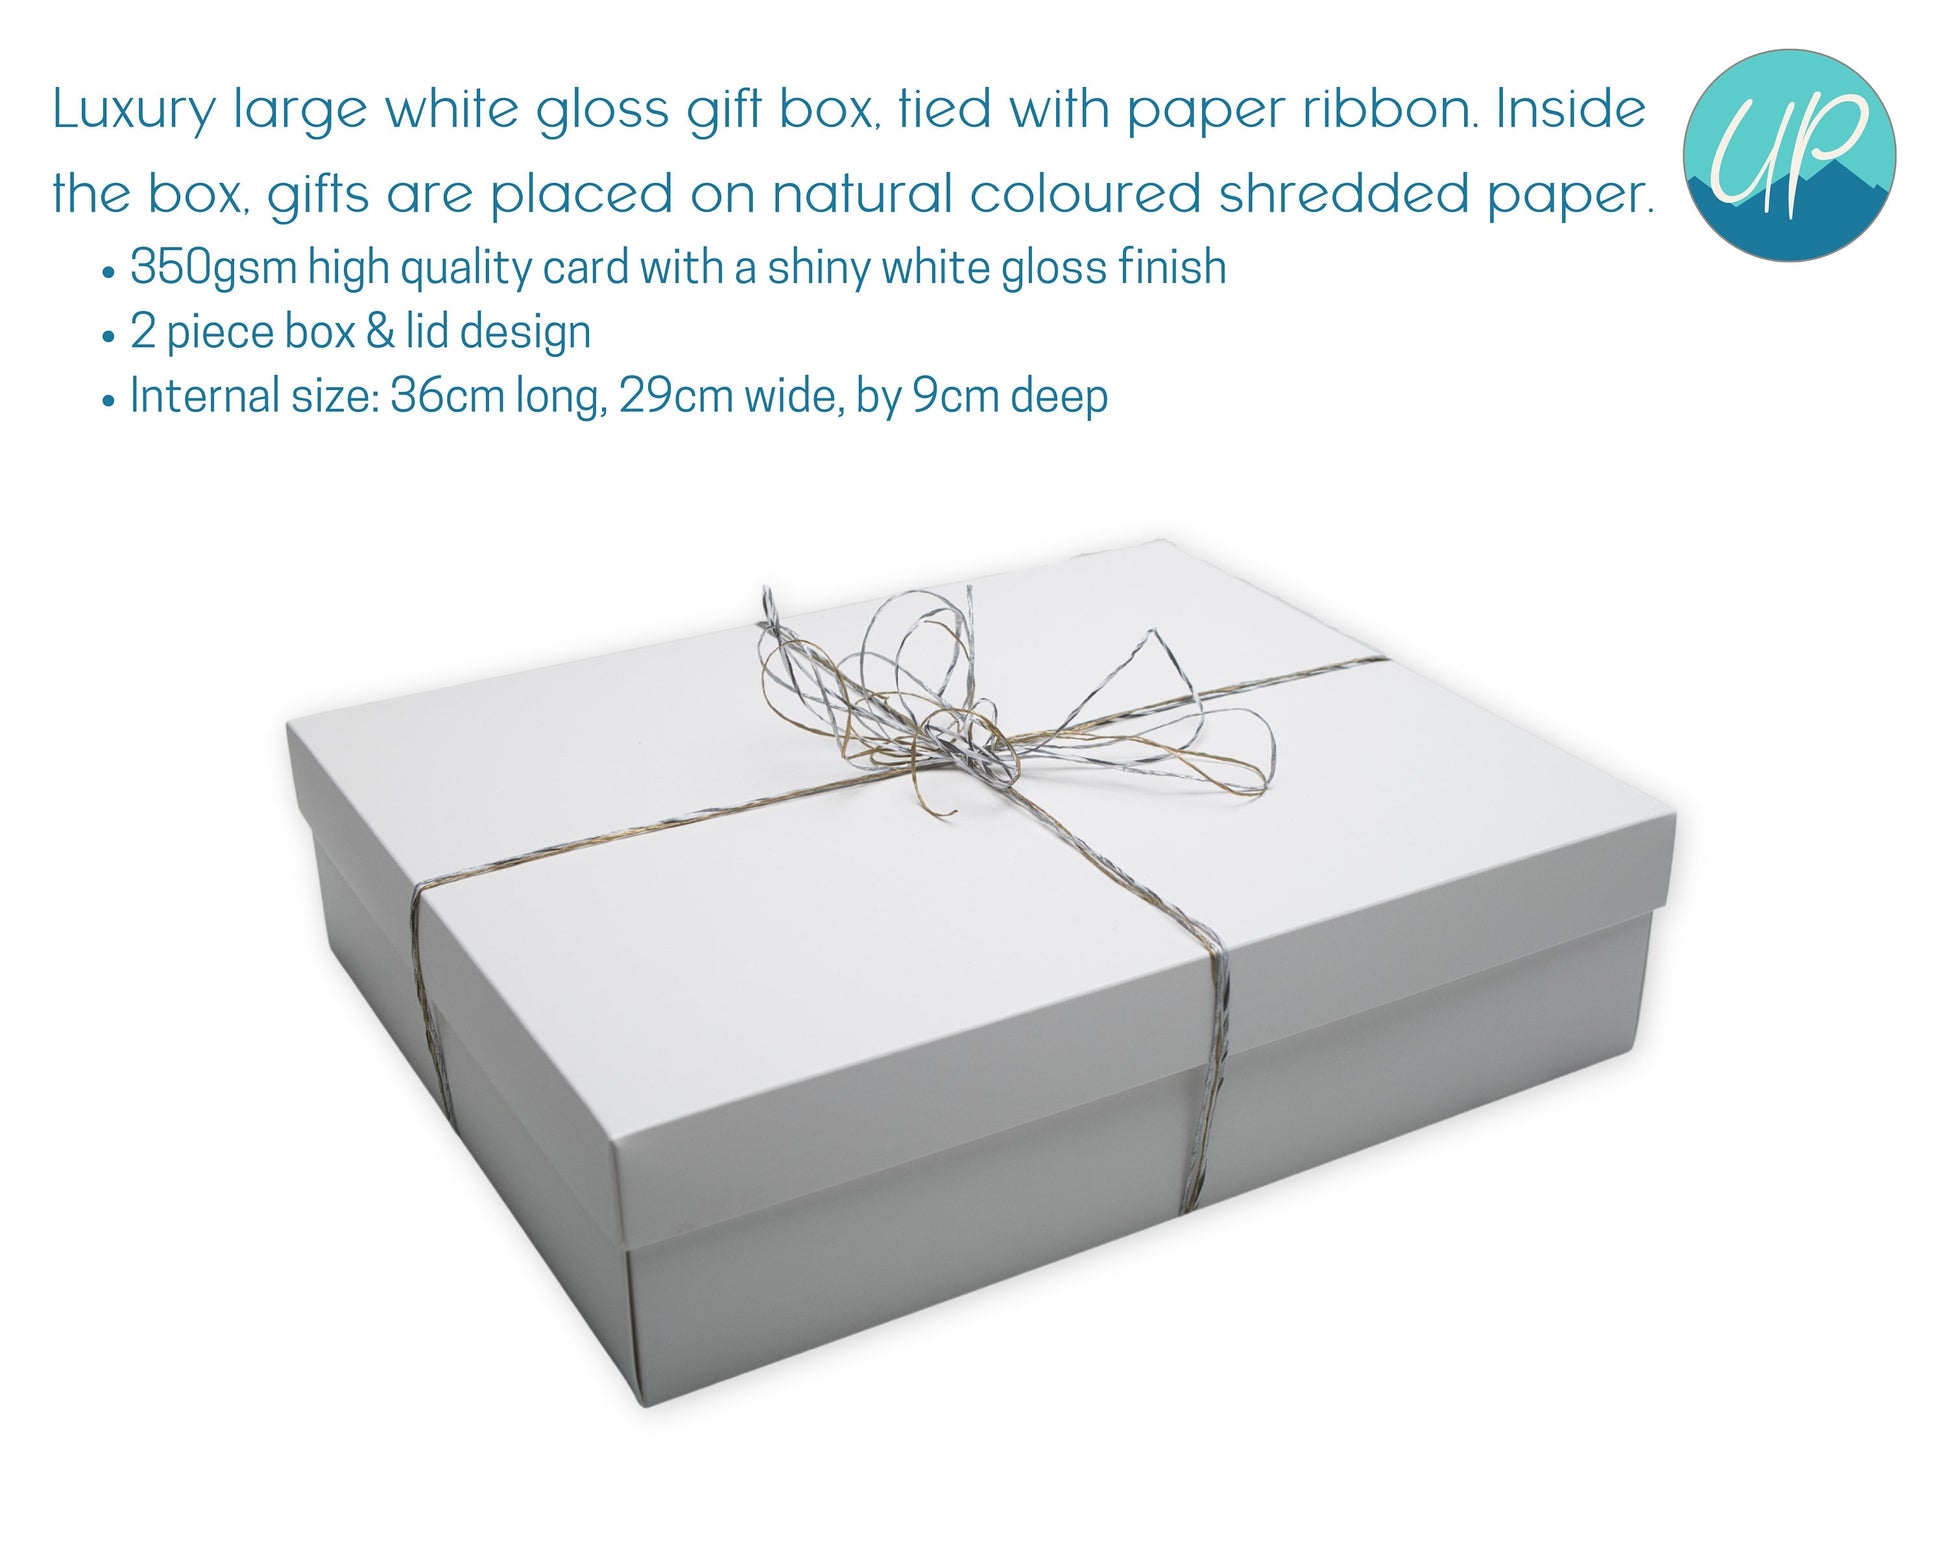 Personalised Keep Moving Forward A5 Wall Art Print Gift Sets, scrunchie, keyring, candle, cosmetics bag, 500ml glass tumbler, Gift Box